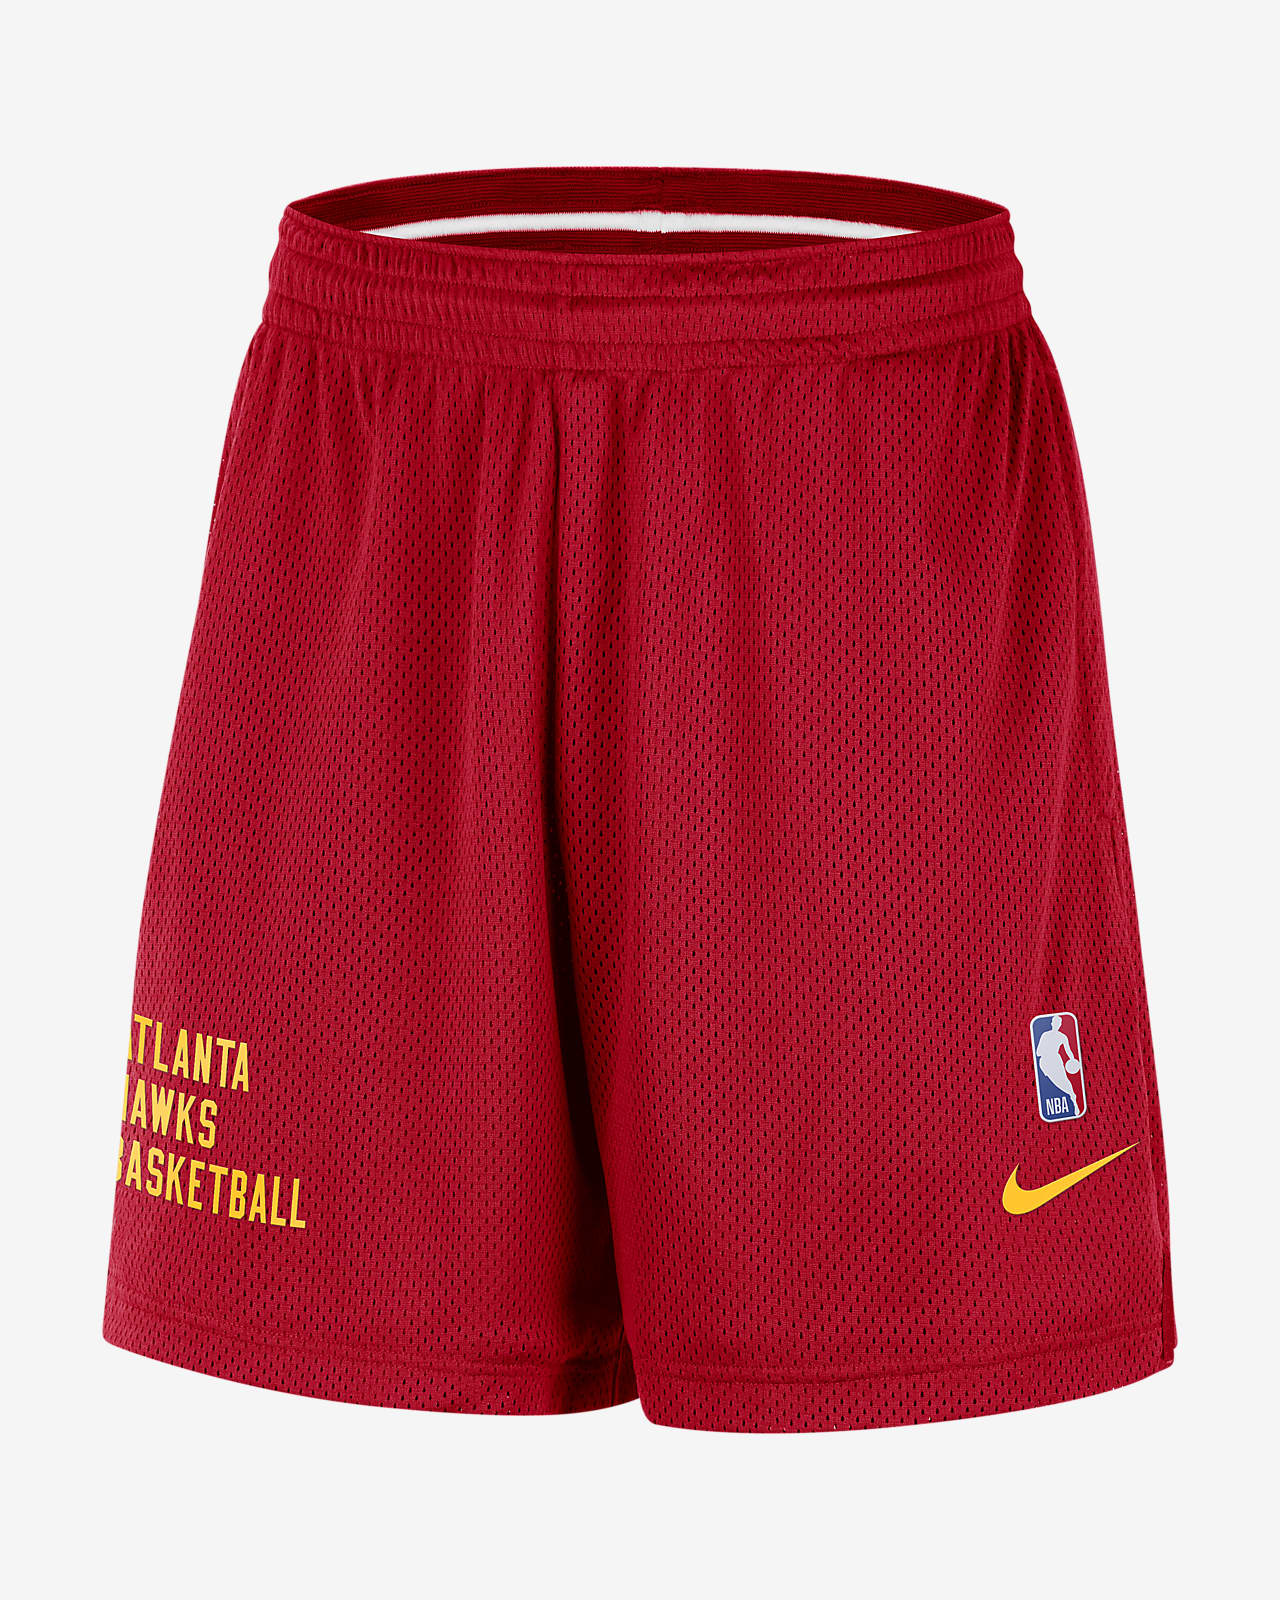 Shorts de malla Nike NBA para hombre Atlanta Hawks